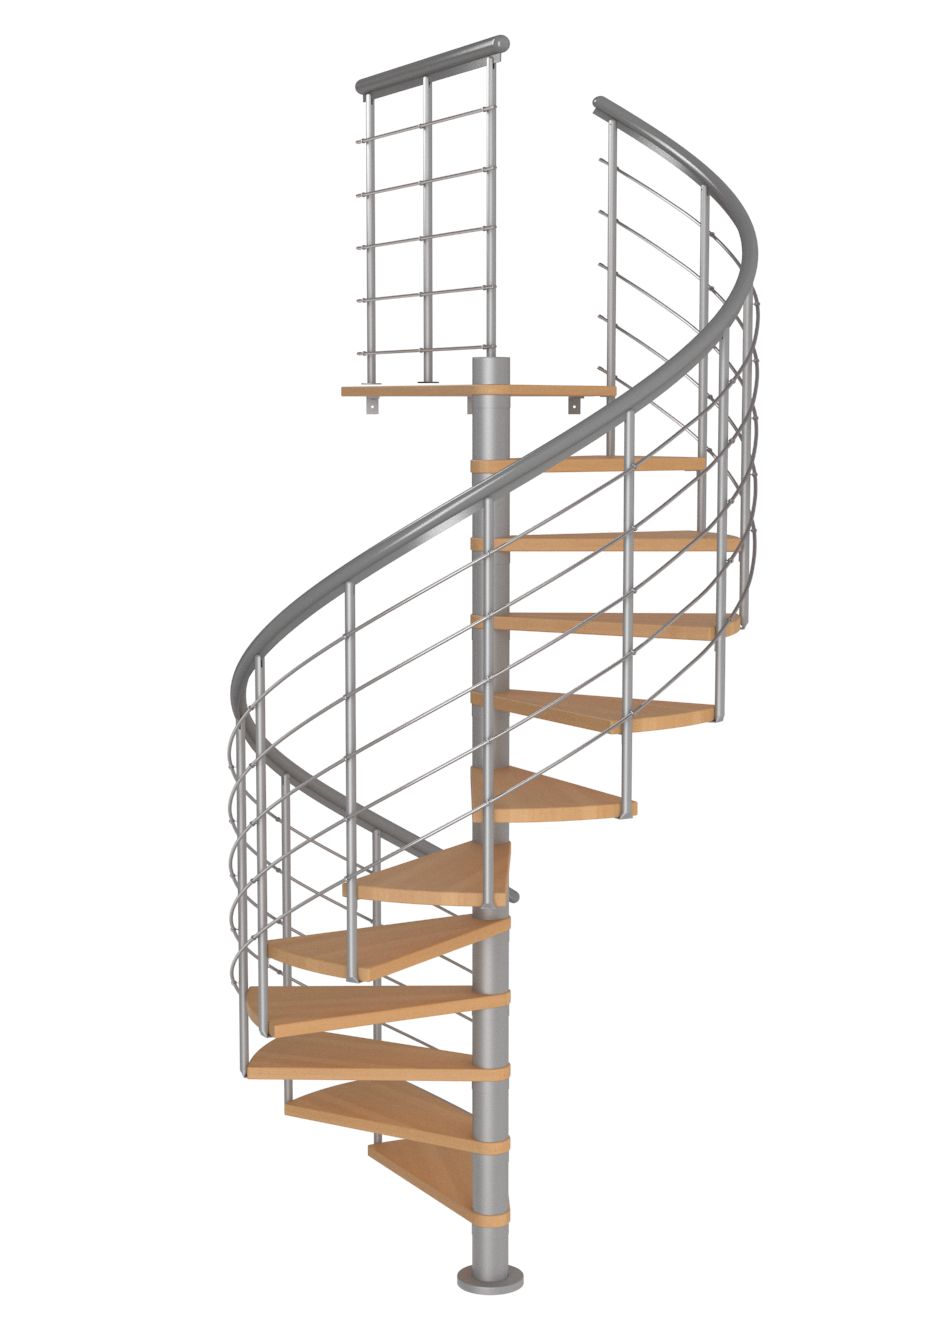 Винтовая лестница Montreal Style Ф1600 мм. высотой 2580-2820 мм серая